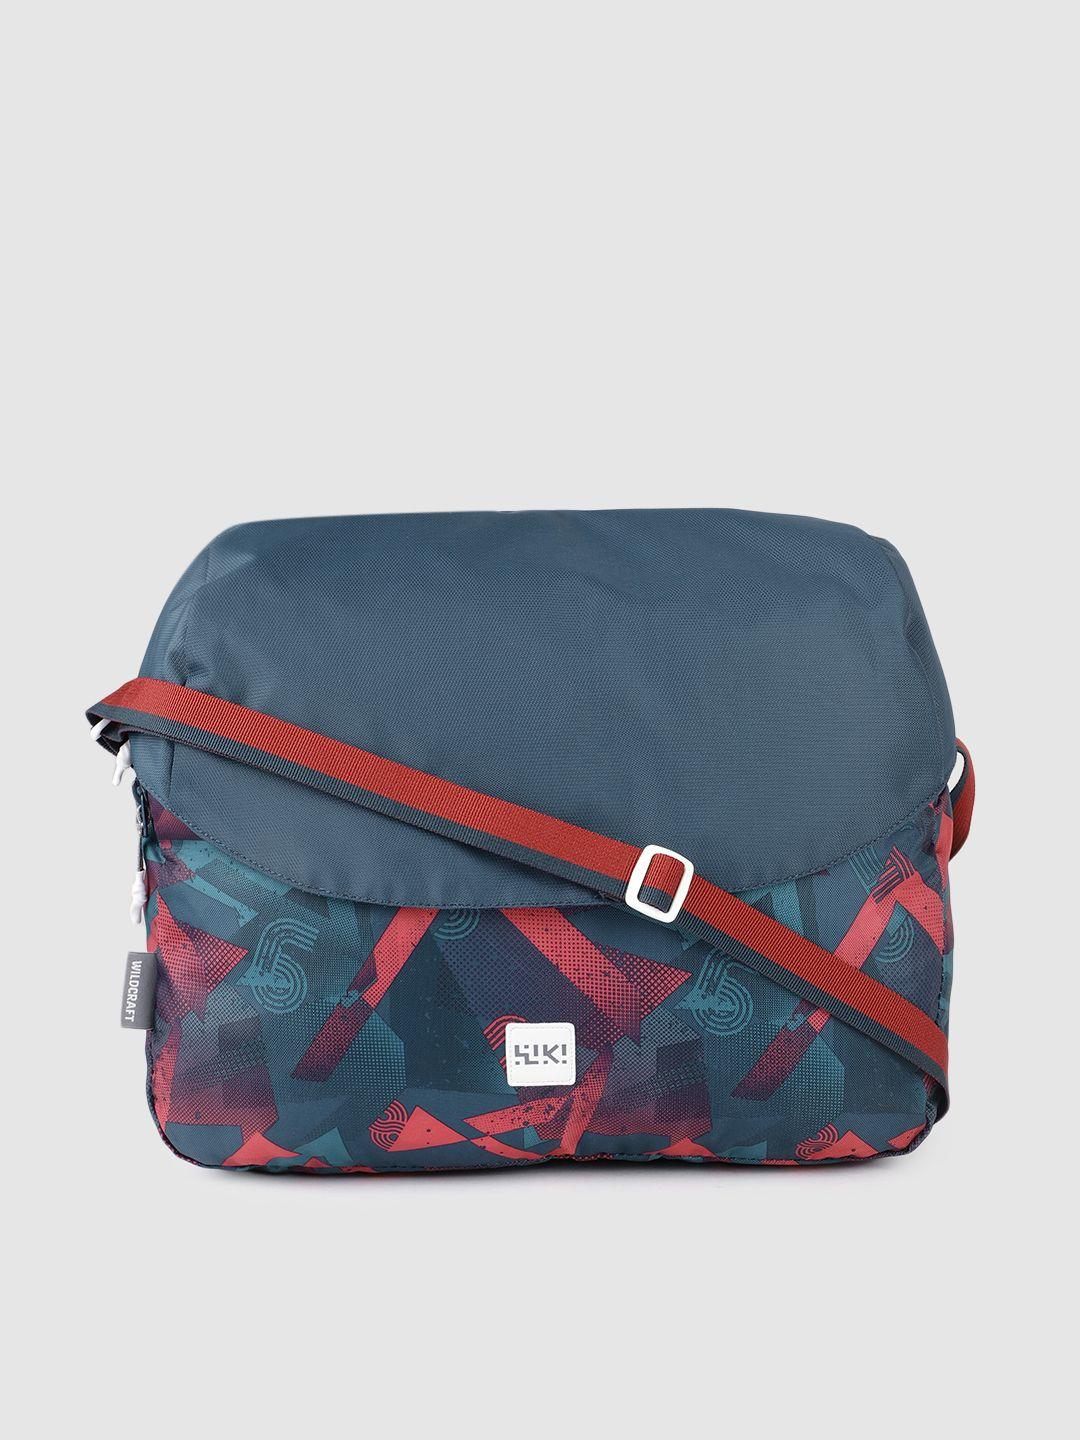 wildcraft unisex navy blue & red printed messenger bag